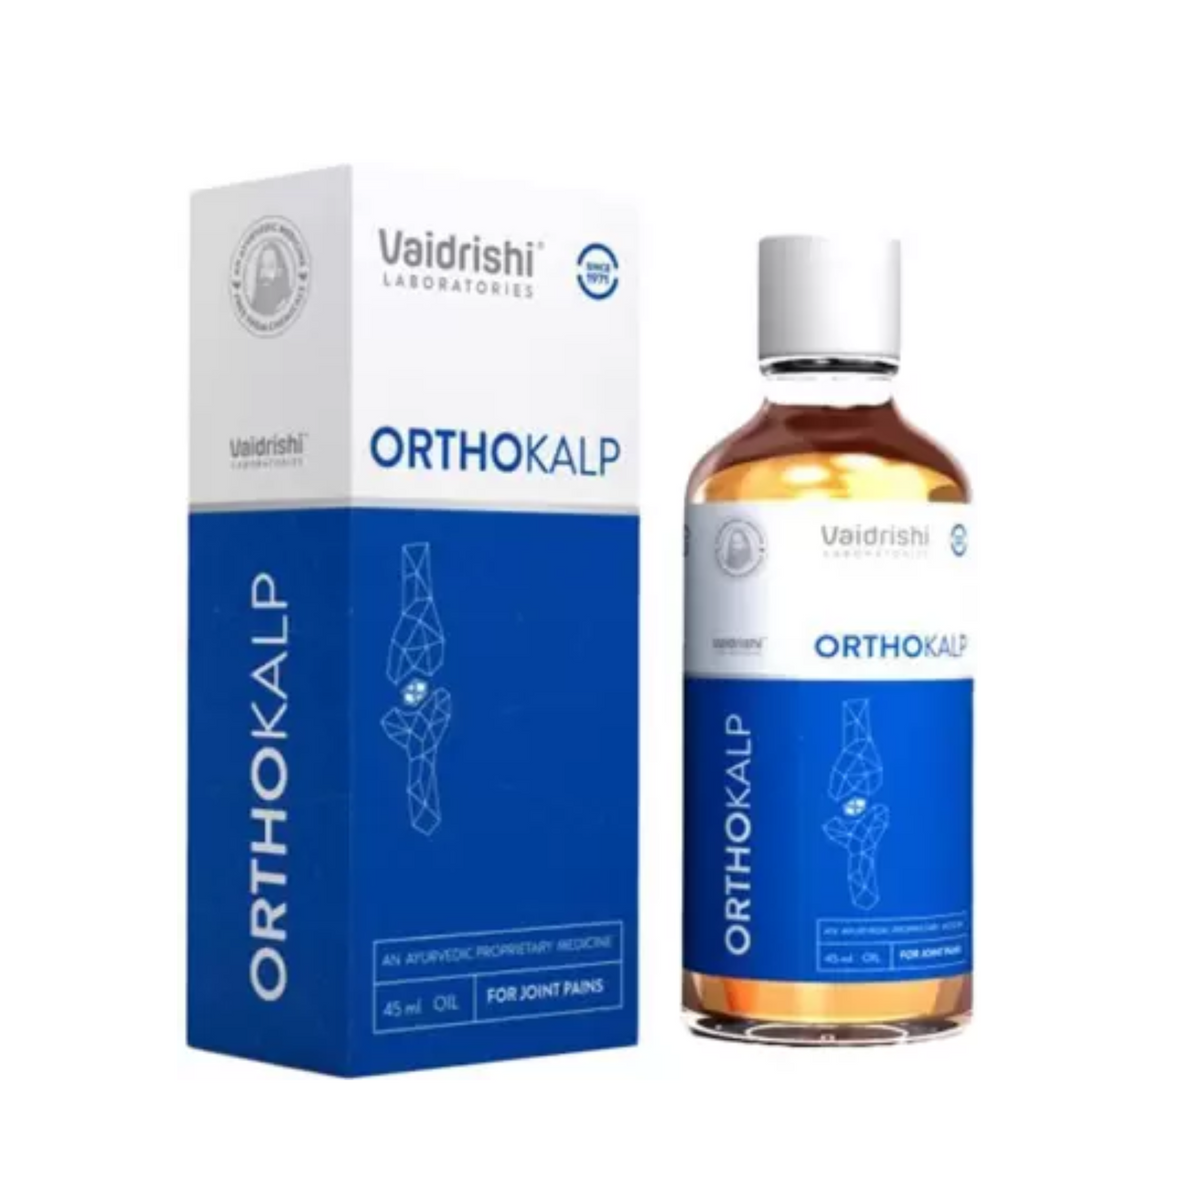 Vaidrishi OrthoKalp Oil - 45 ml